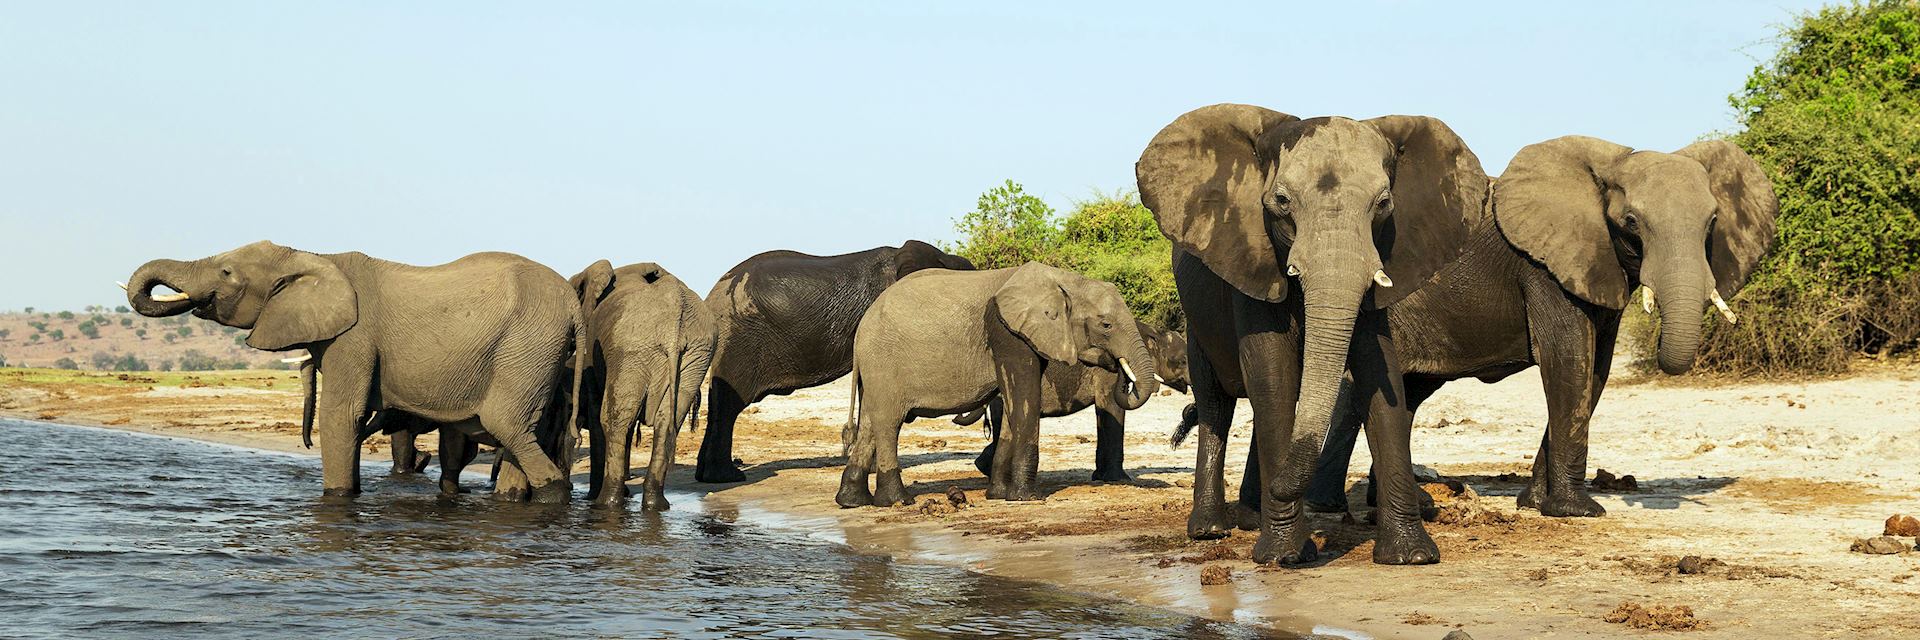 Elephant on the Chobe River